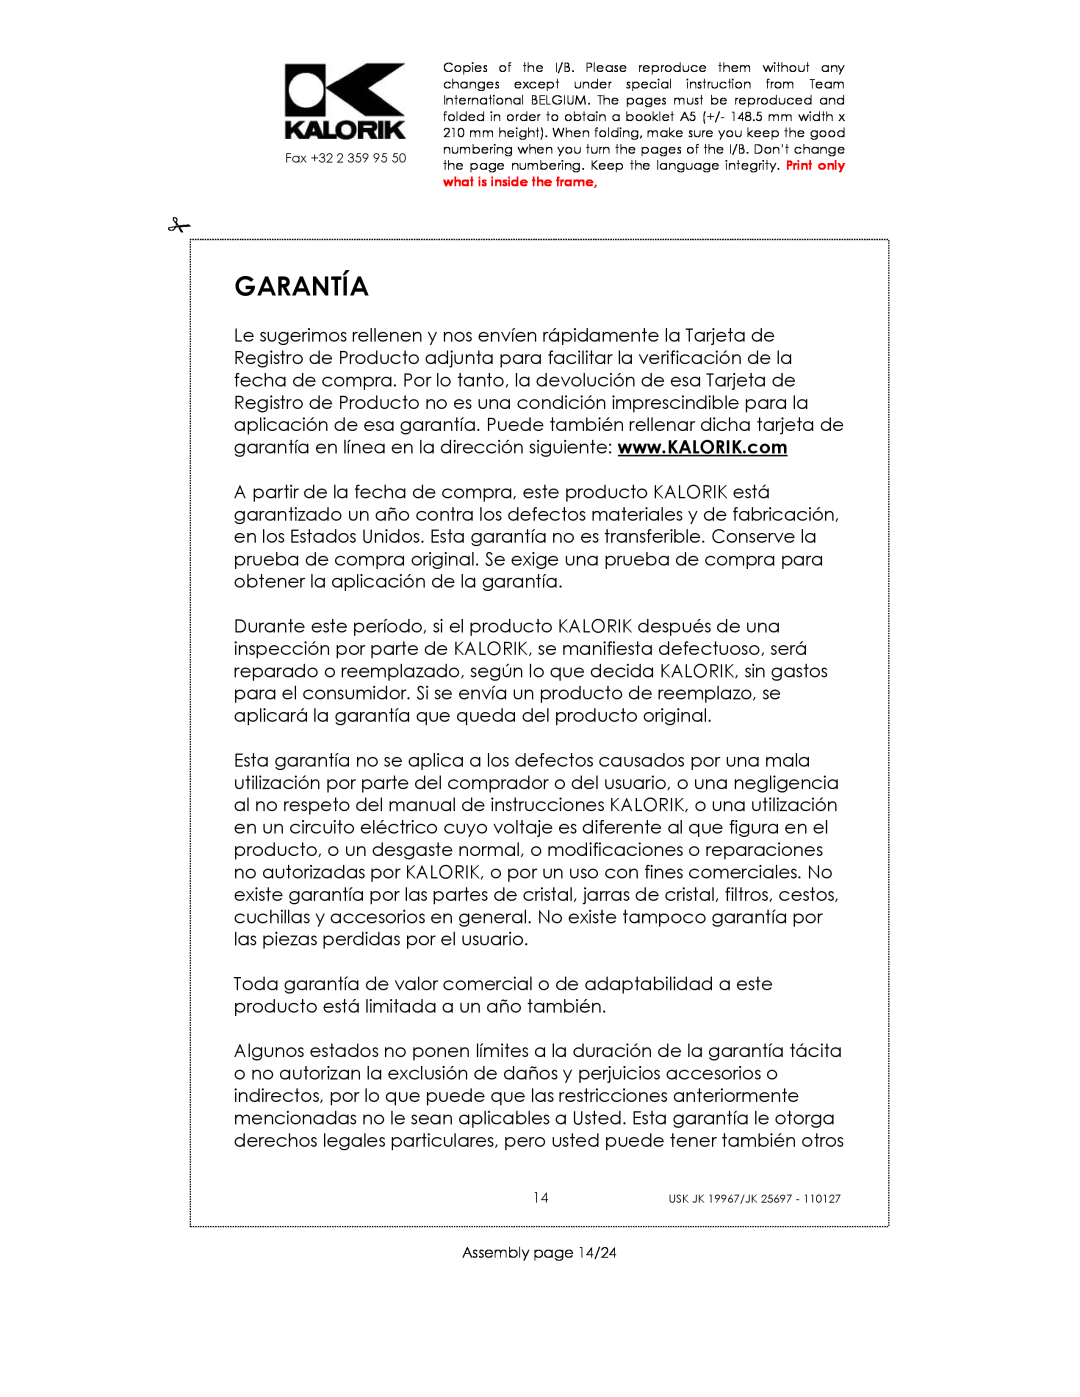 Kalorik JK 19967, JK 25697 manual Garantía, Assembly page 14/24 